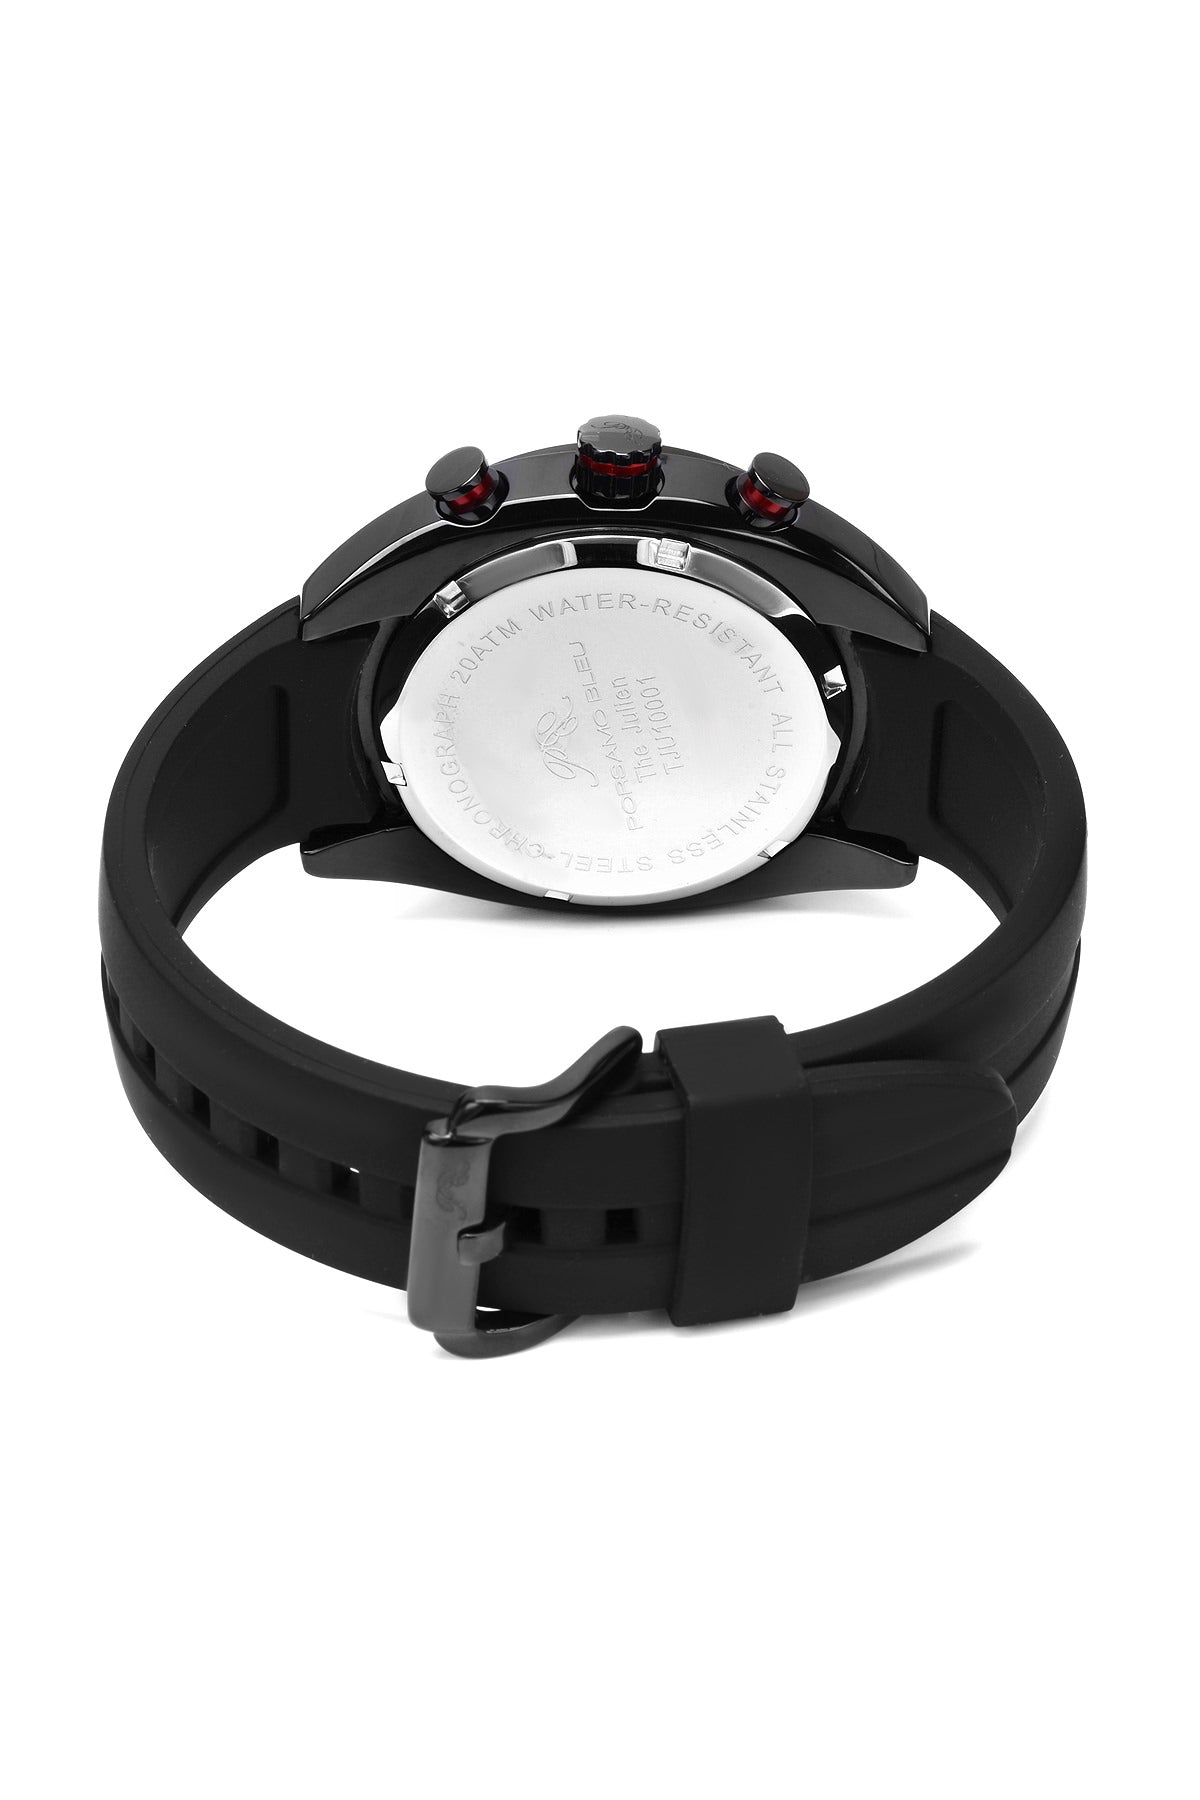 Porsamo Bleu Julien luxury  chronograph men's watch, silicone strap, black, red 275AJUS